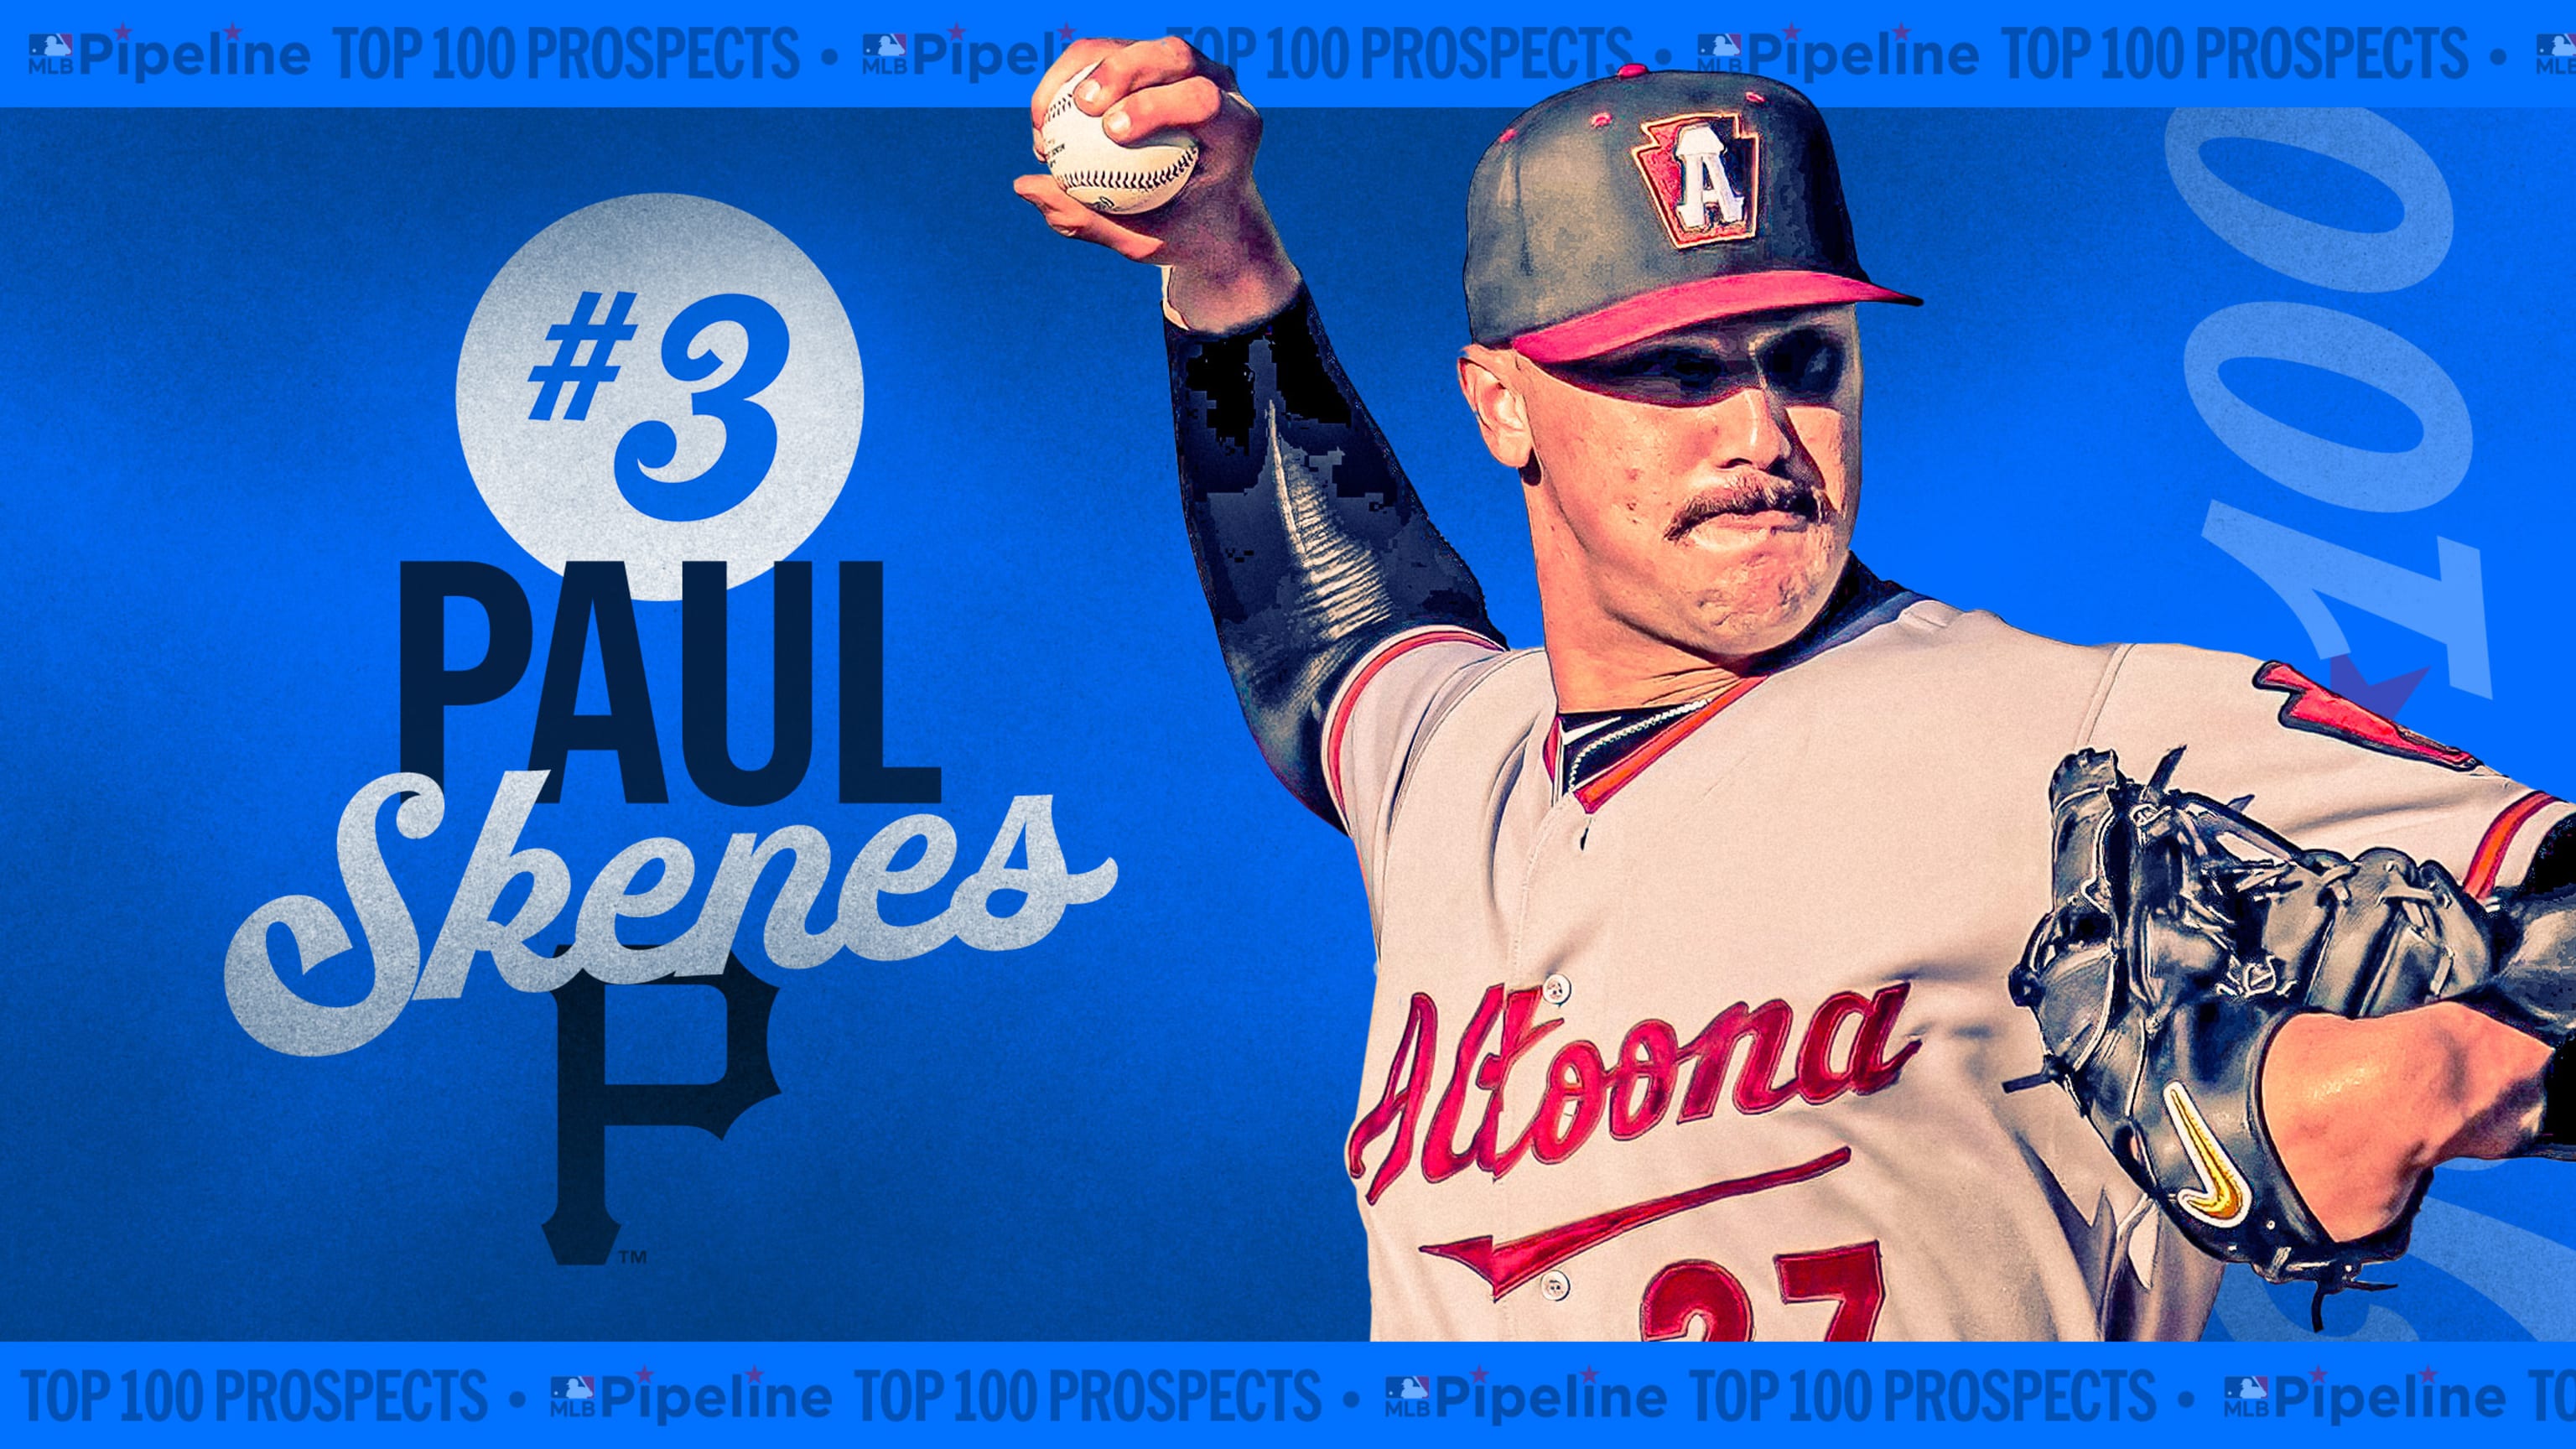 Top 100 Prospects list MLB Pipeline preseason 2024